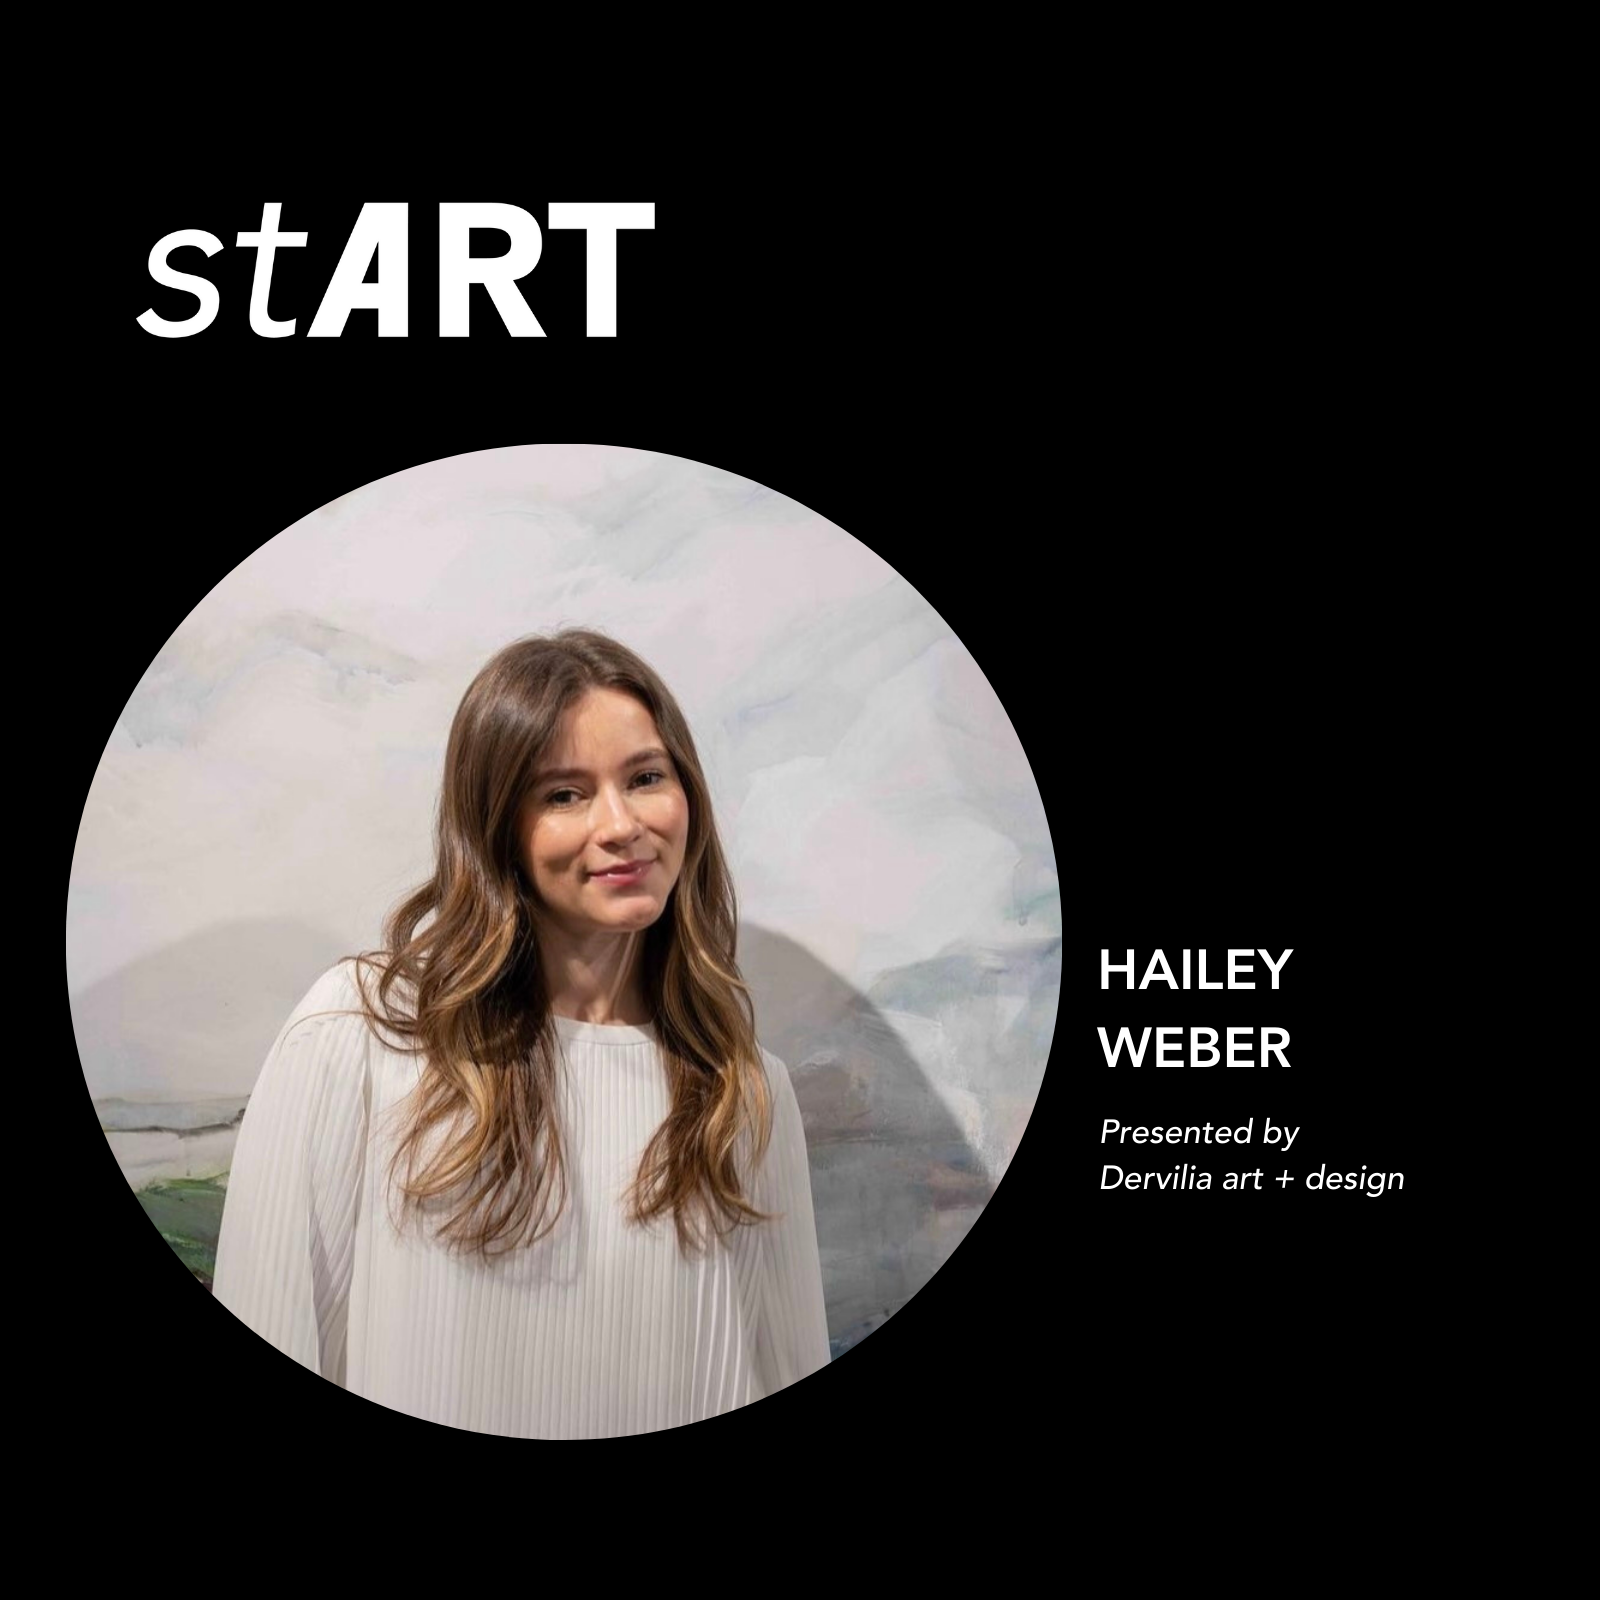 stART: Hailey Weber, presented by Dervilia art + design